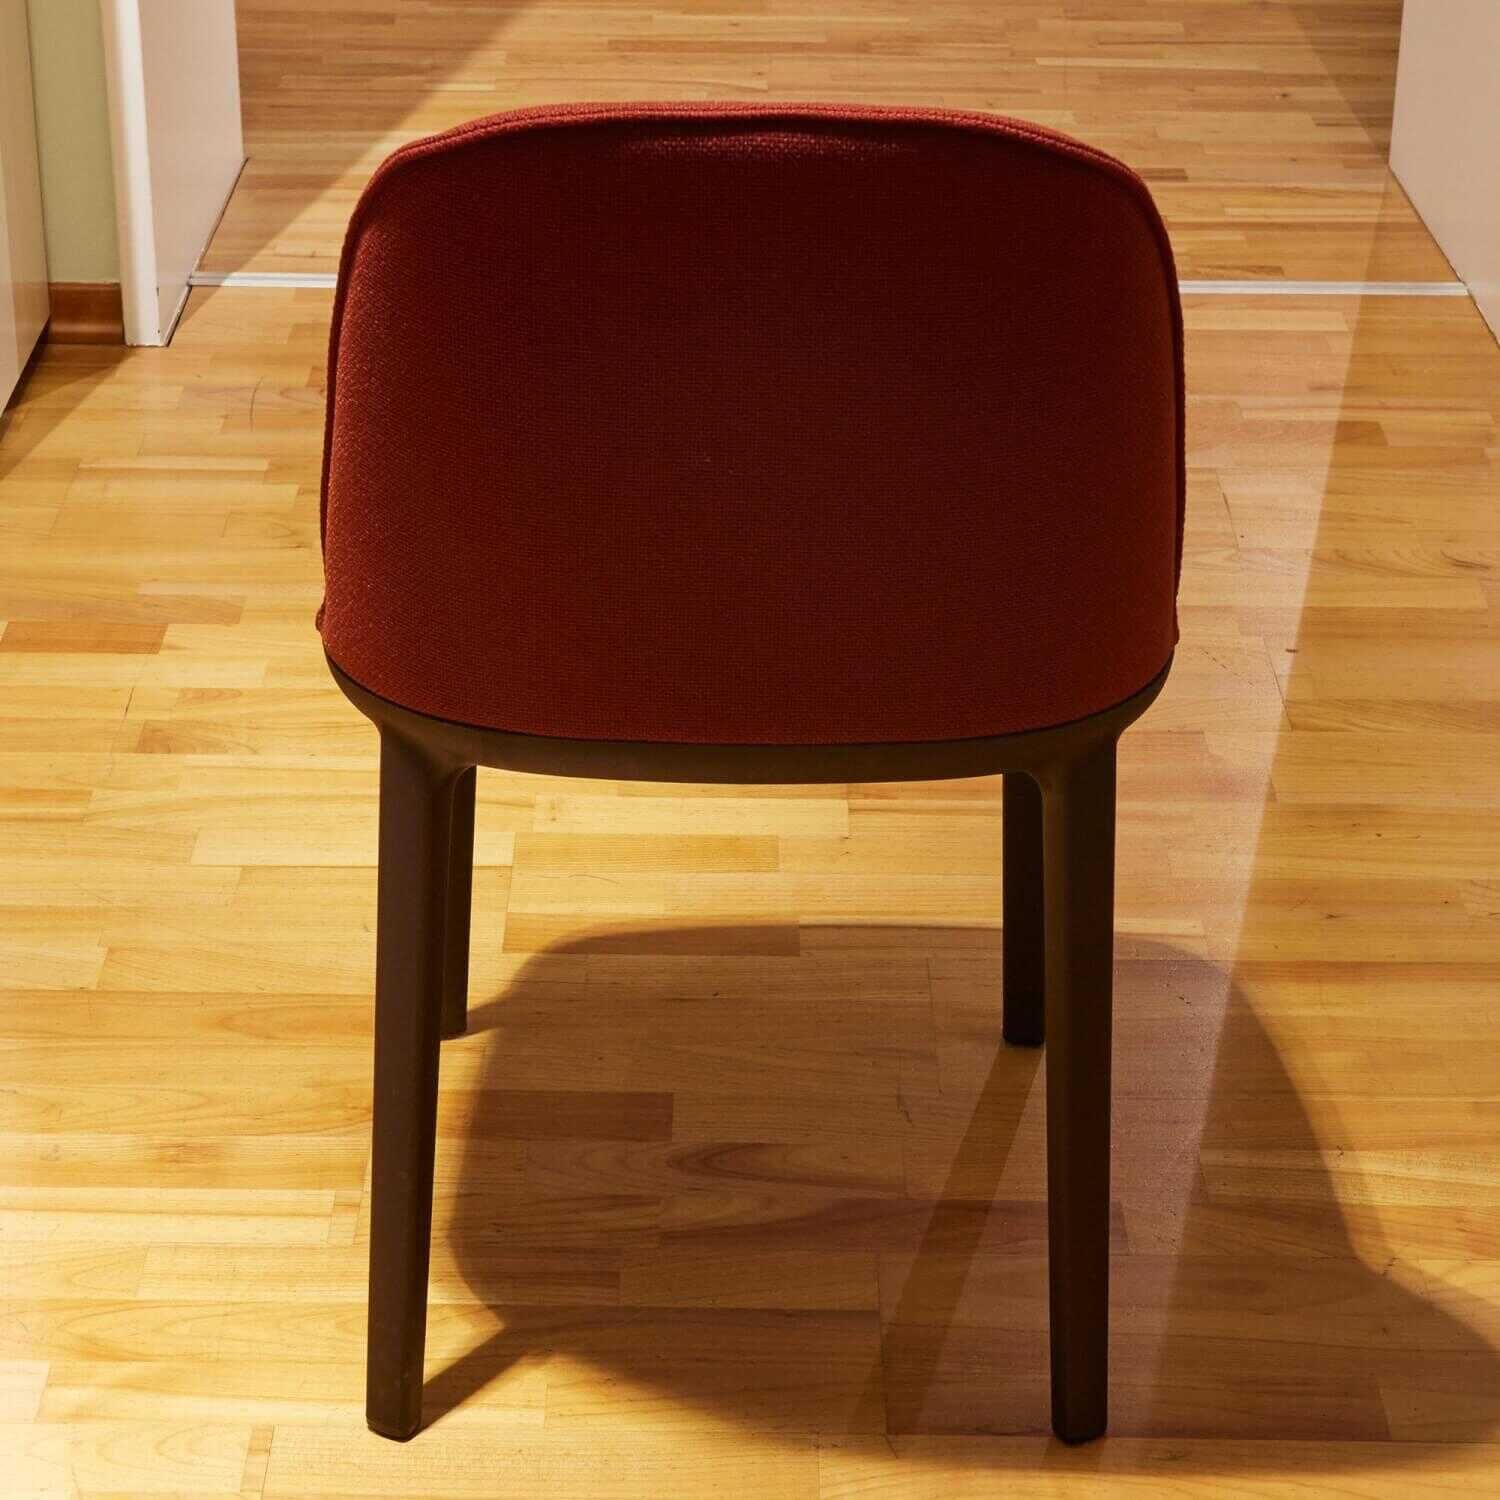 6er-Set Stuhl Softshell Chair Stoff Laser 0120 Dunkelrot 06 Gestellfarbe Ex